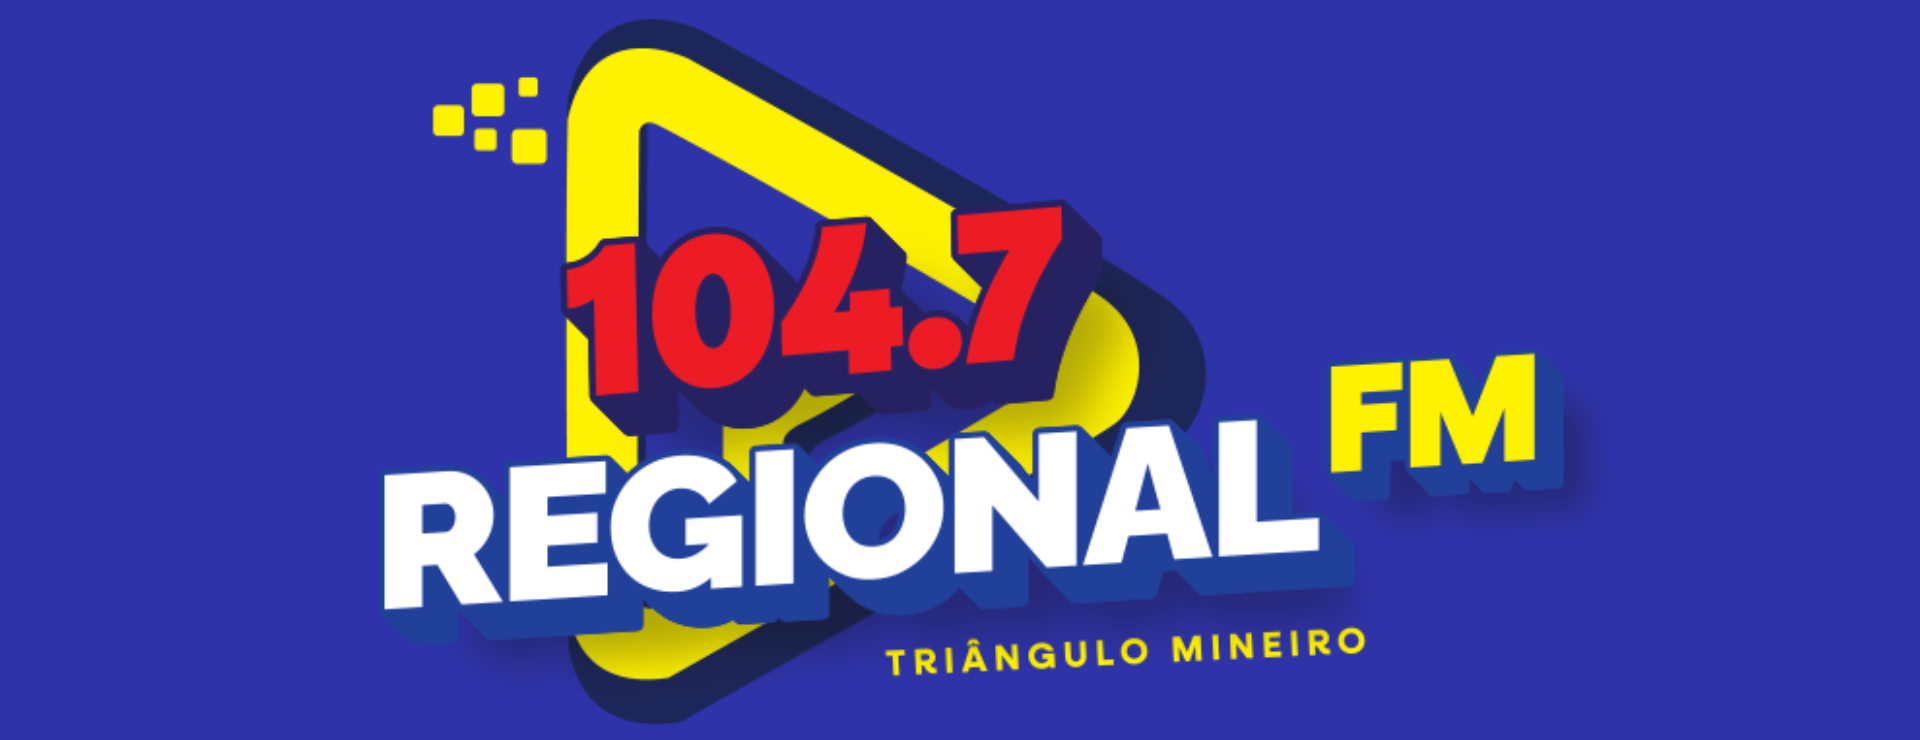 REGIONAL FM 104.7